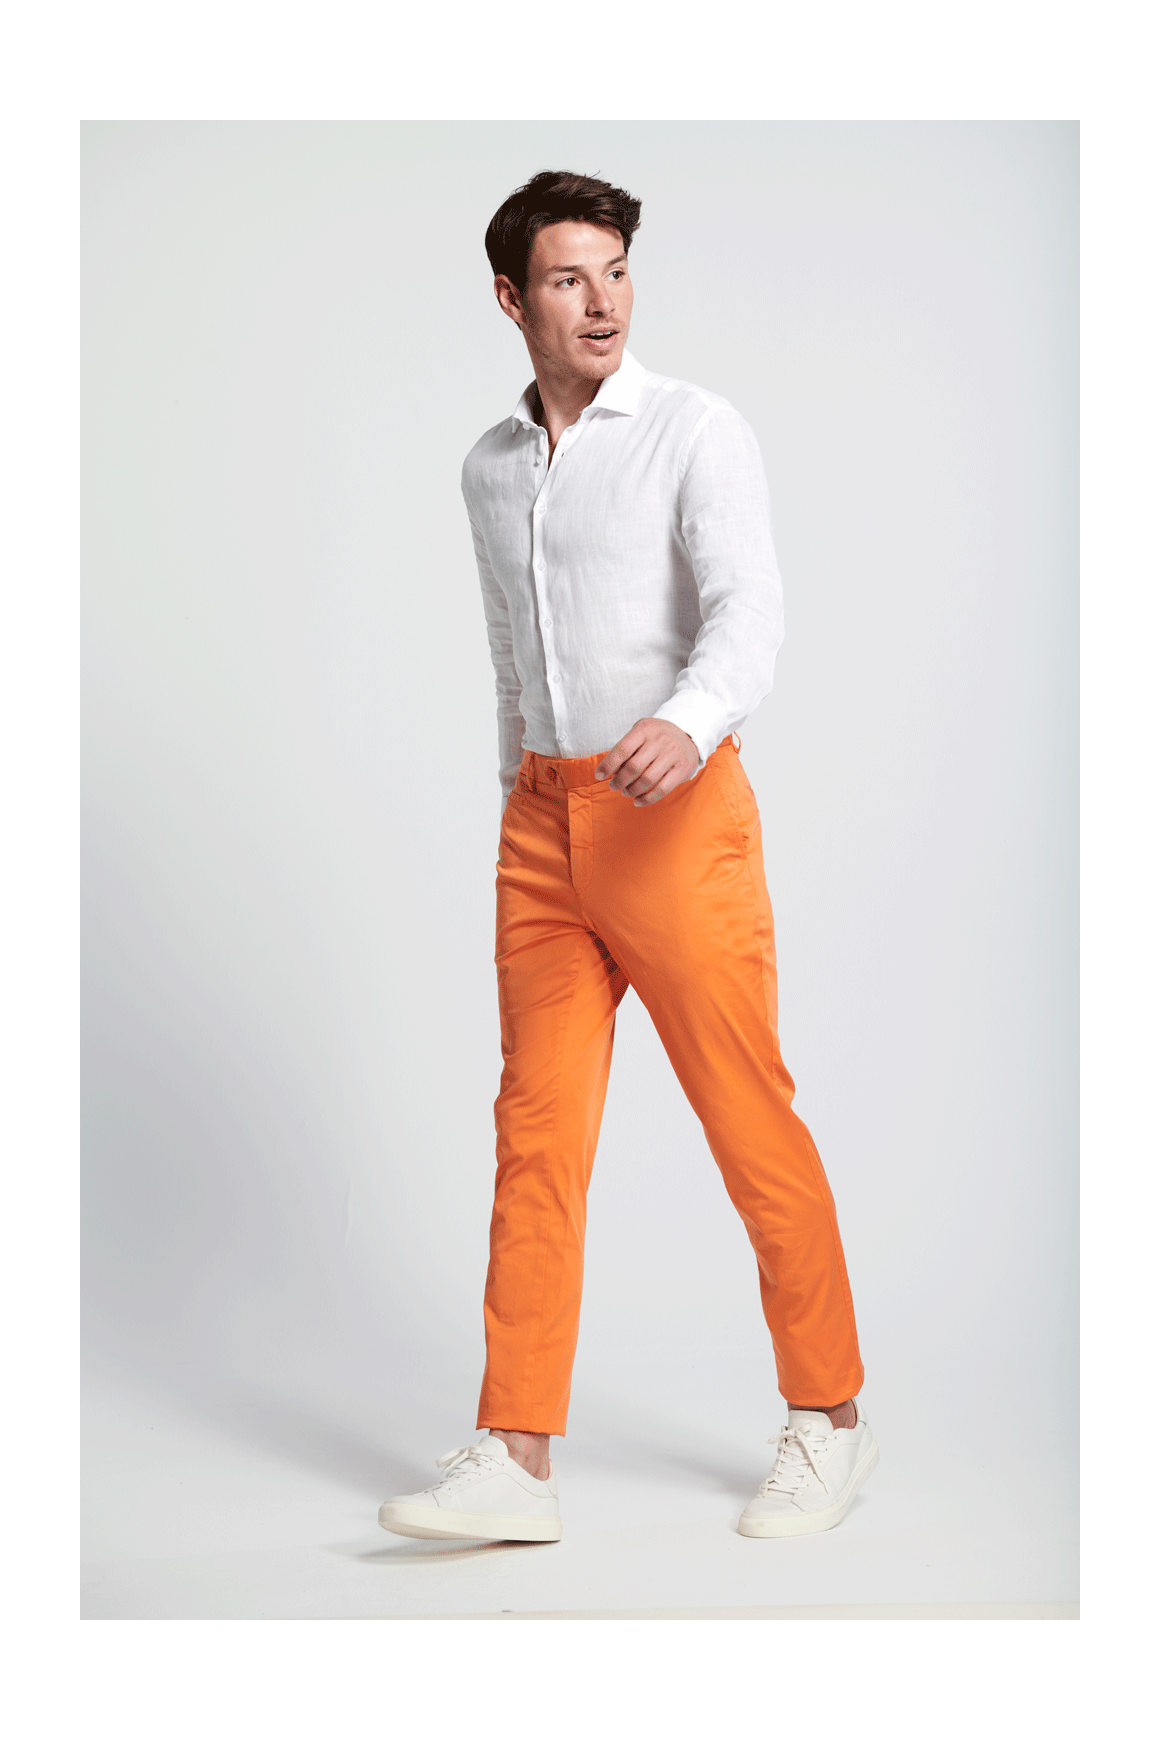 Achat Pantalon Riviera Tangerine